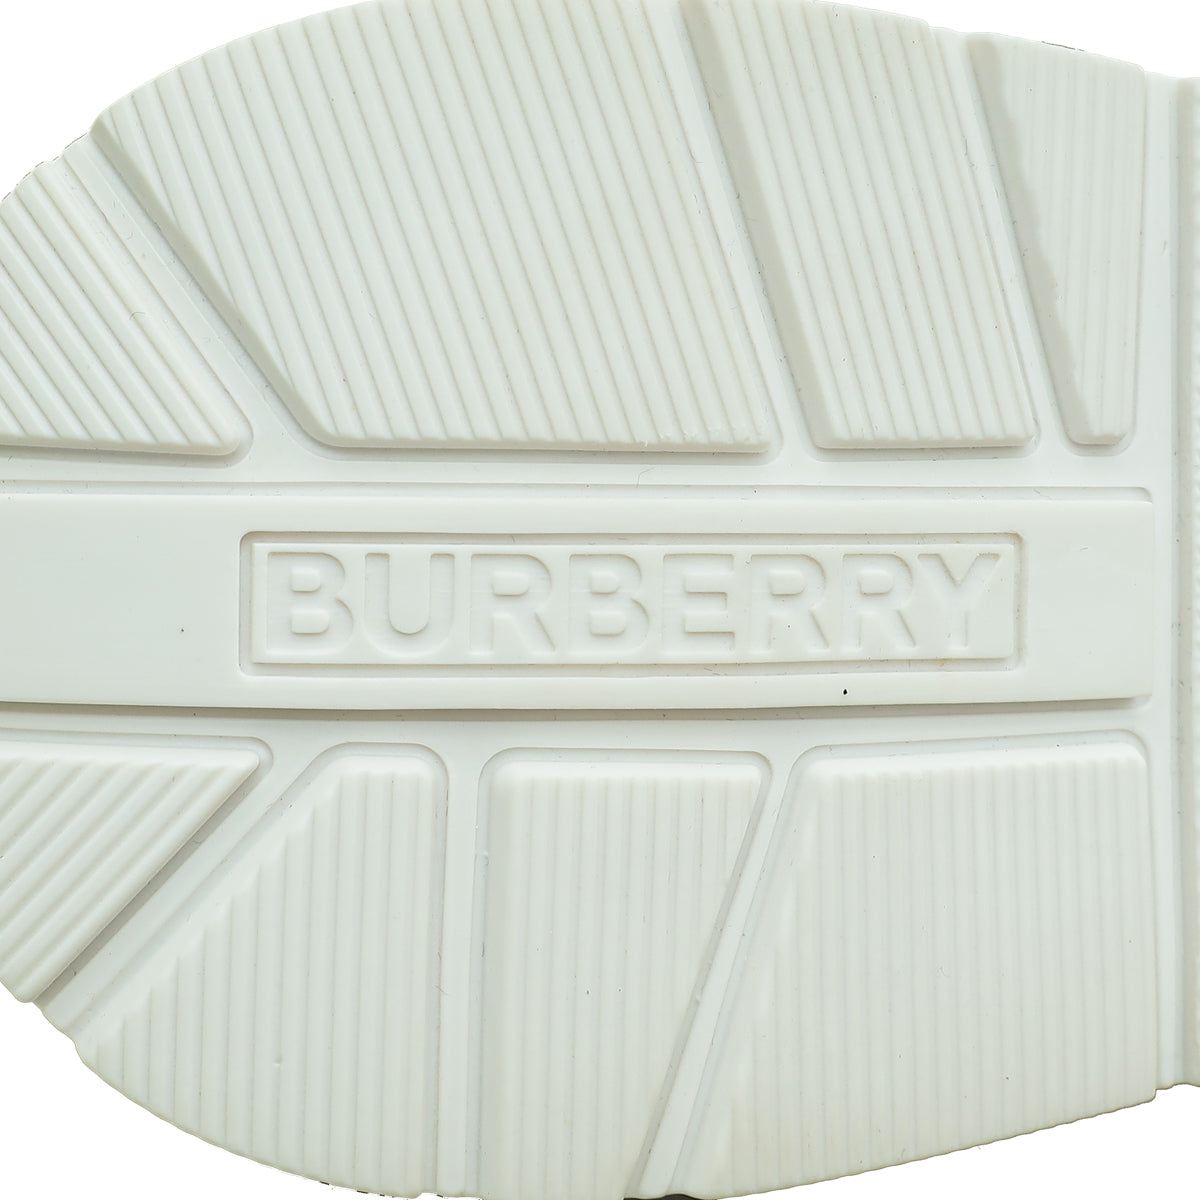 Burberry Bicolor Vintage Check Regis Sneaker 39